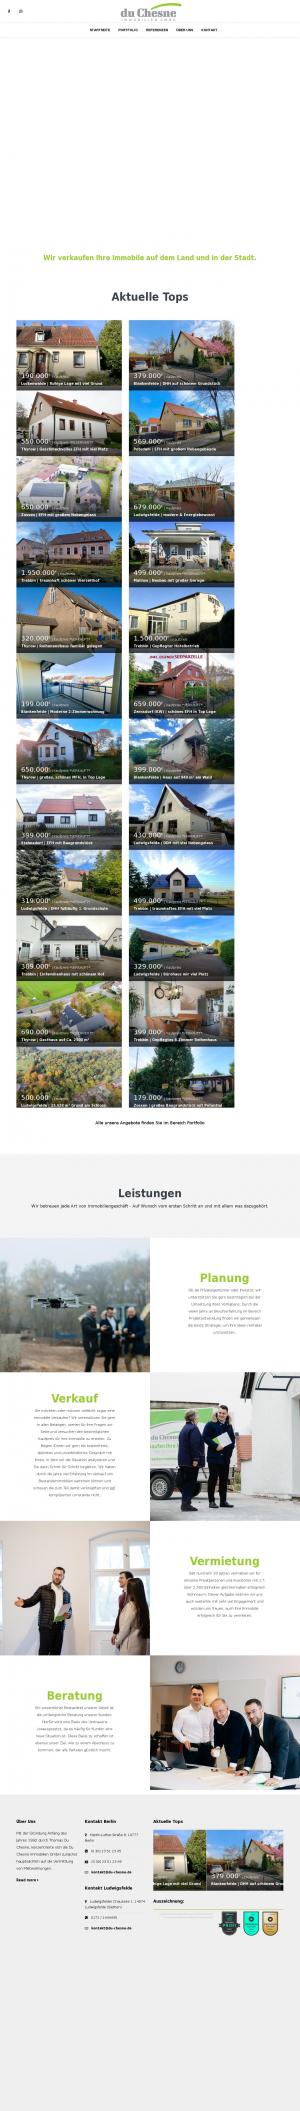 www.duchesne-immobilien.de